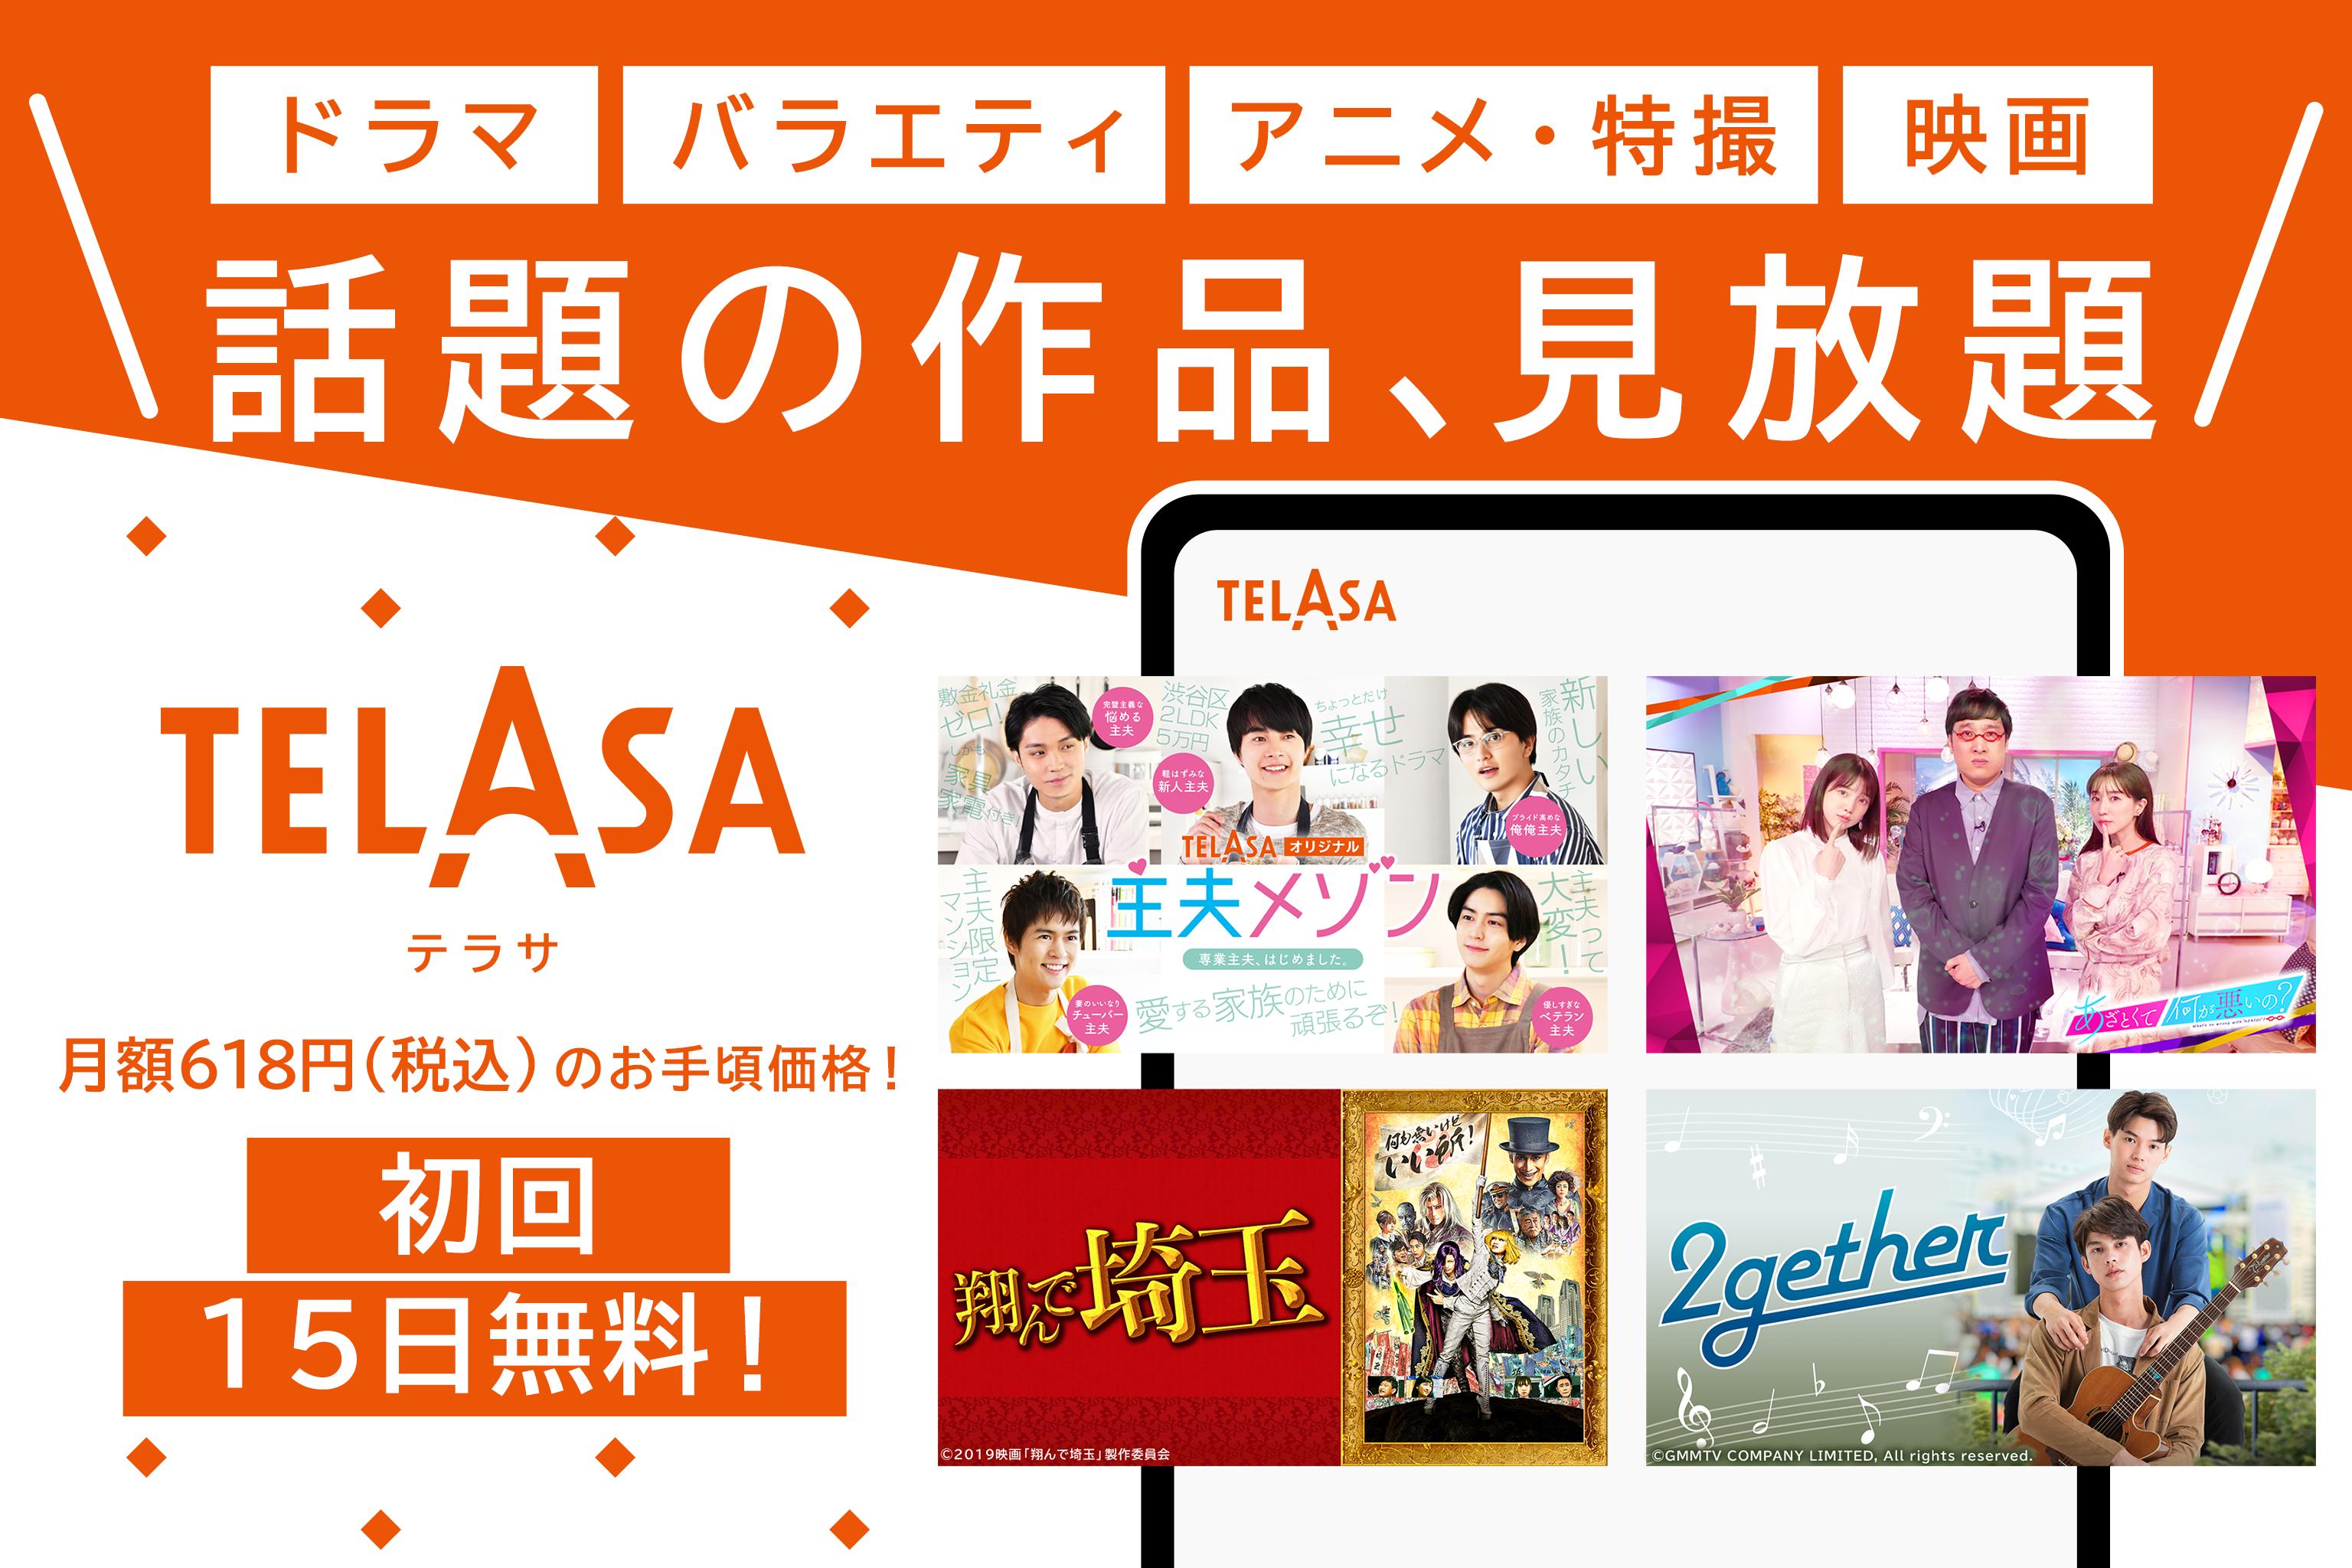 Telasa テラサ 旧ビデオパス 人気のドラマ バラエティ アニメ 映画など動画見放題 For Android Apk Download